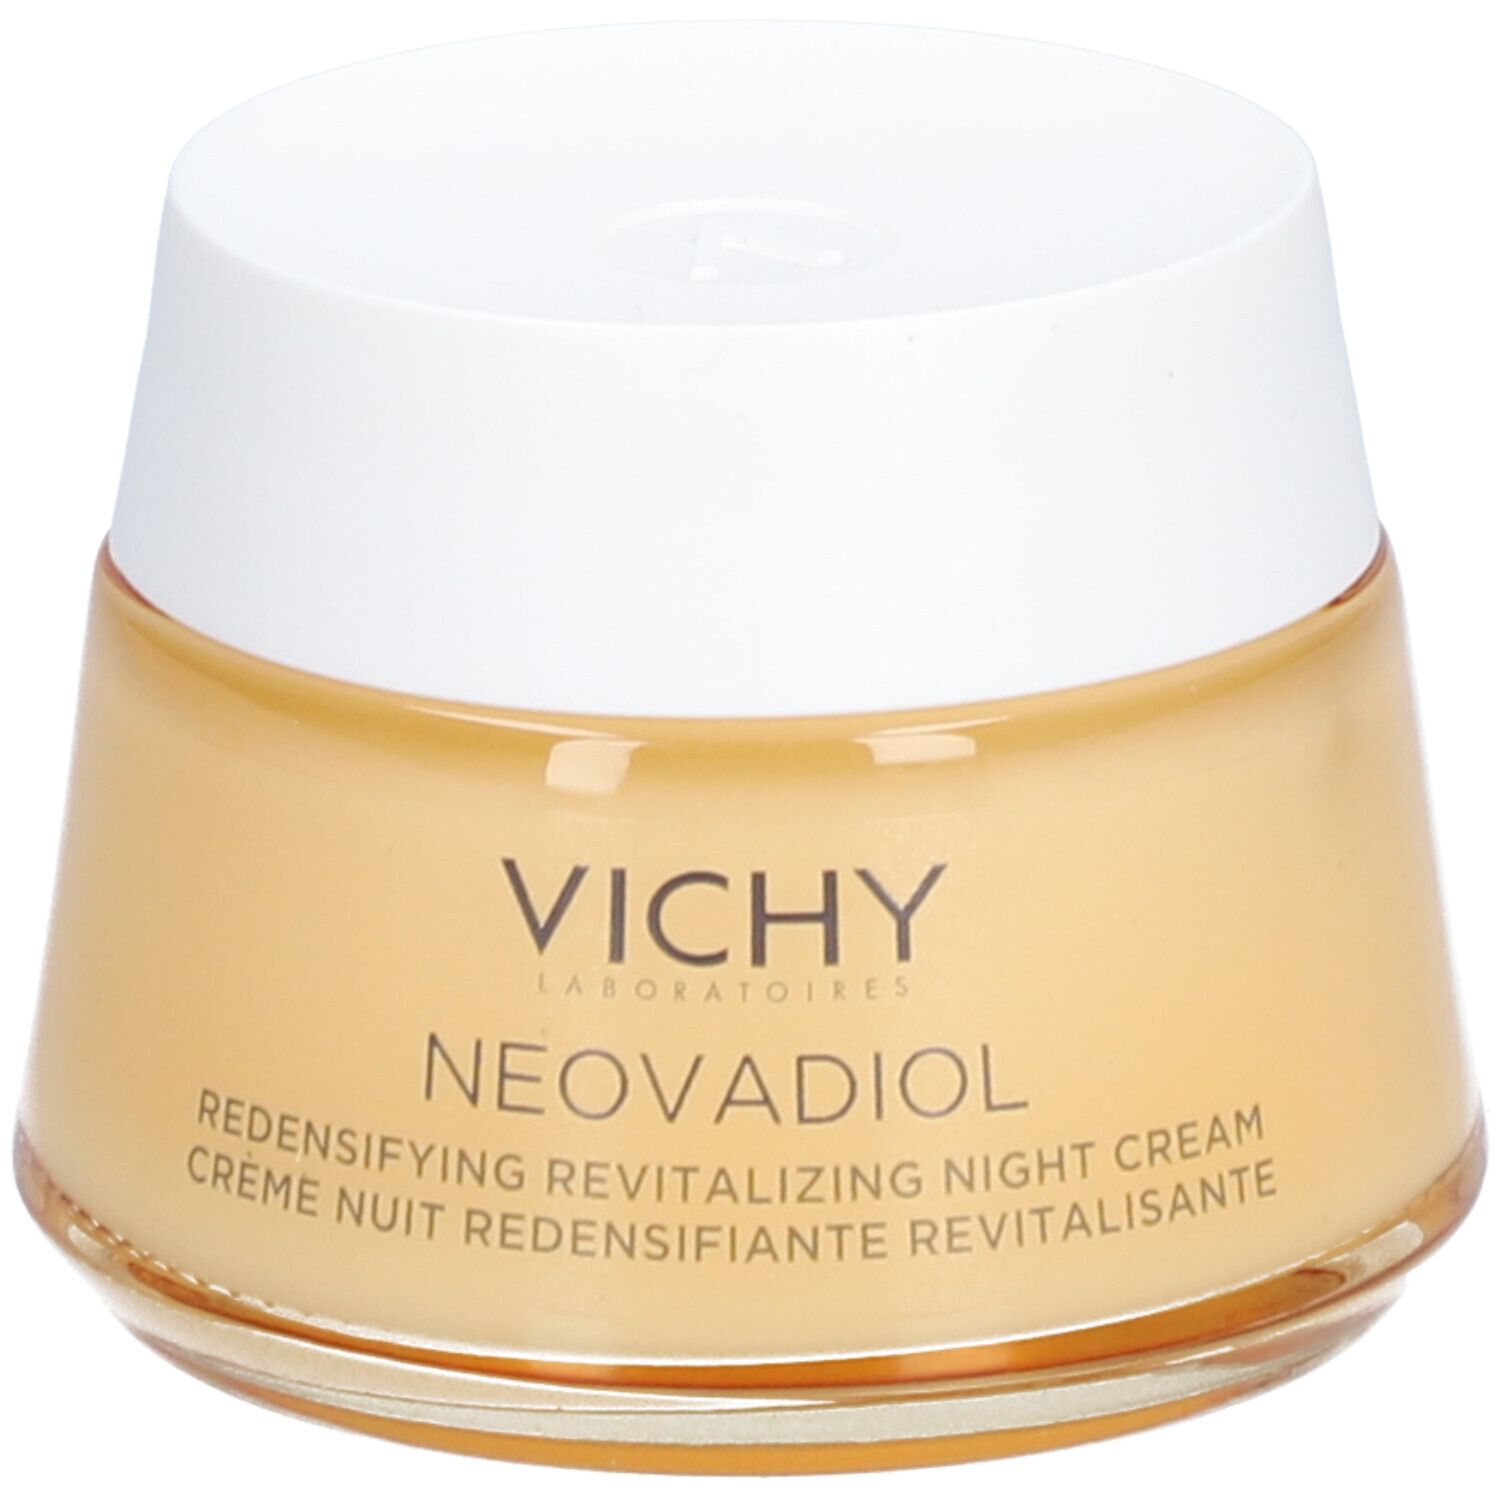 Vichy Neovadiol Peri-Menopause Crème Nuit Redensifiante Revitalisante